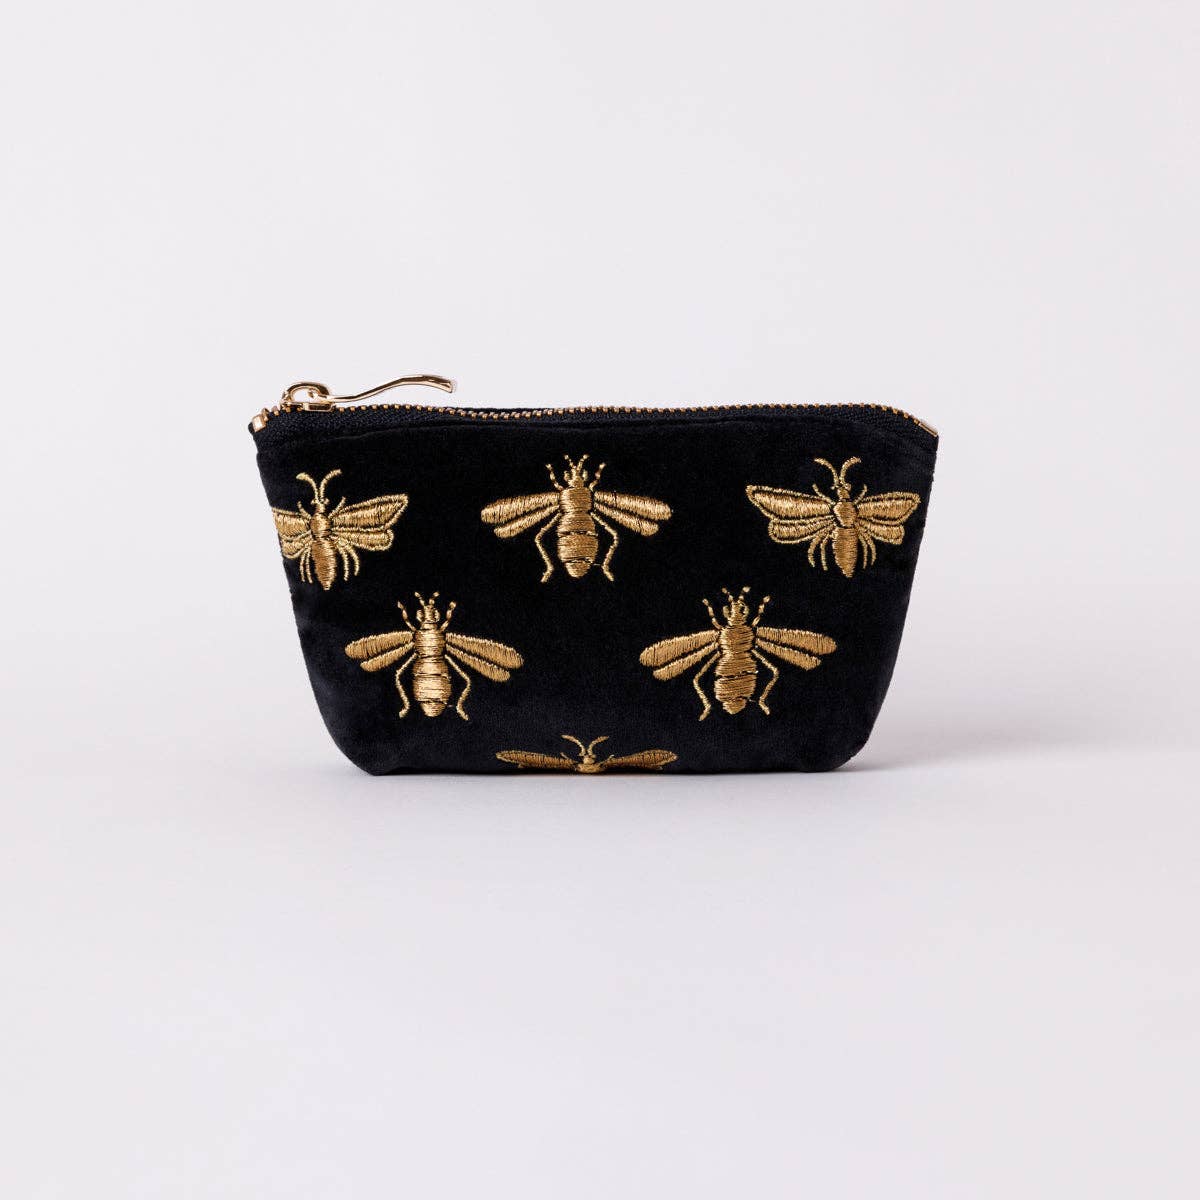 Elizabeth scarlett bee coin purse black